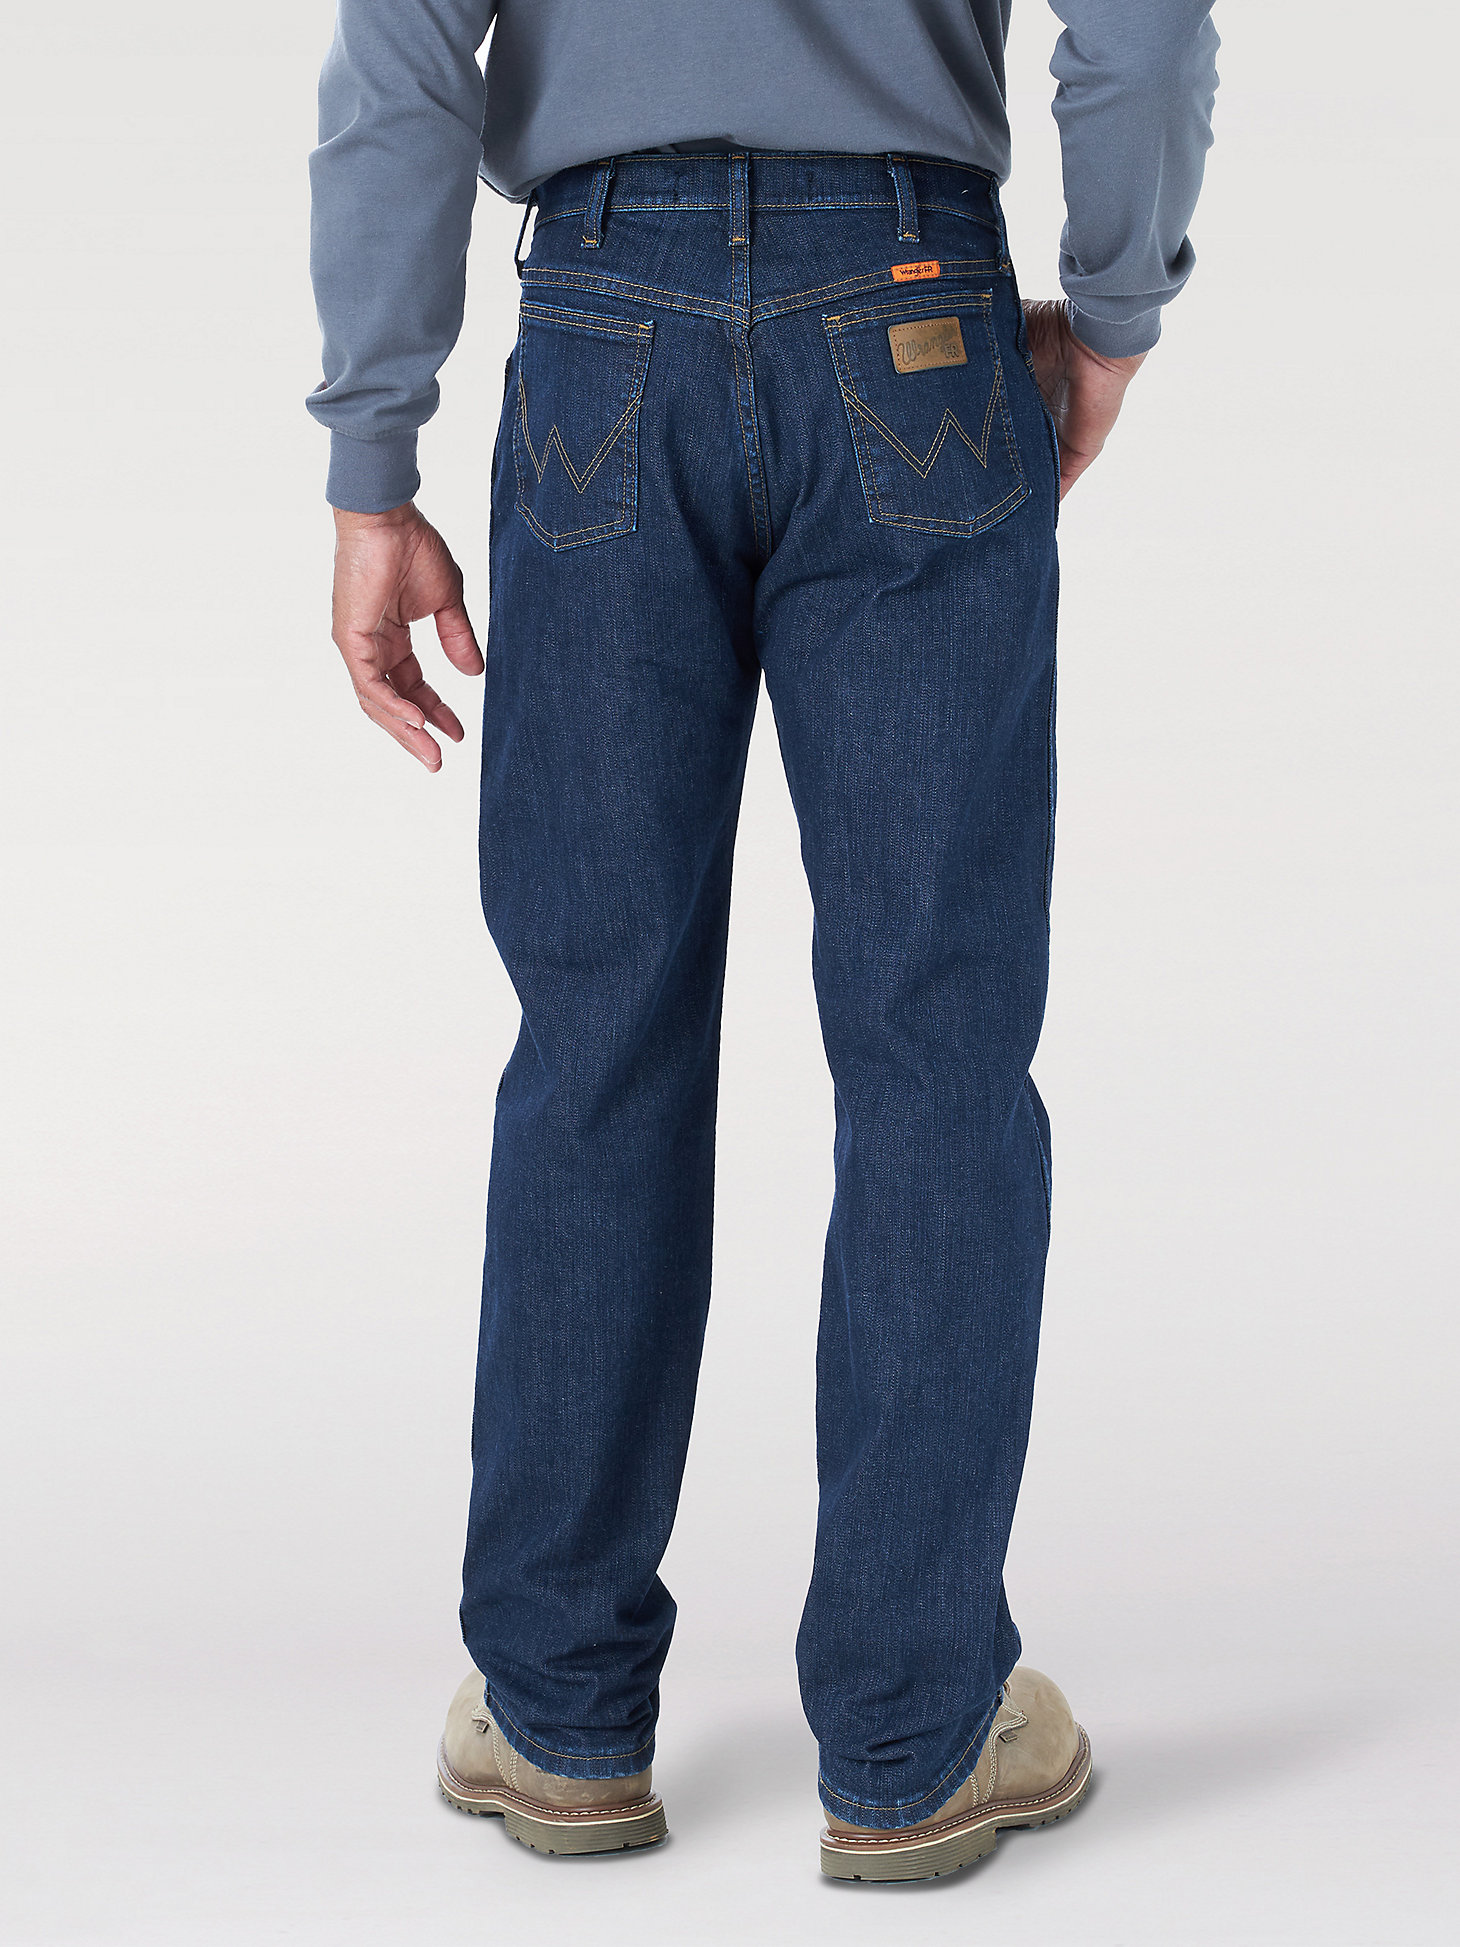 Wrangler® FR Flame Resistant Original Fit Jean in Dark Wash alternative view 2